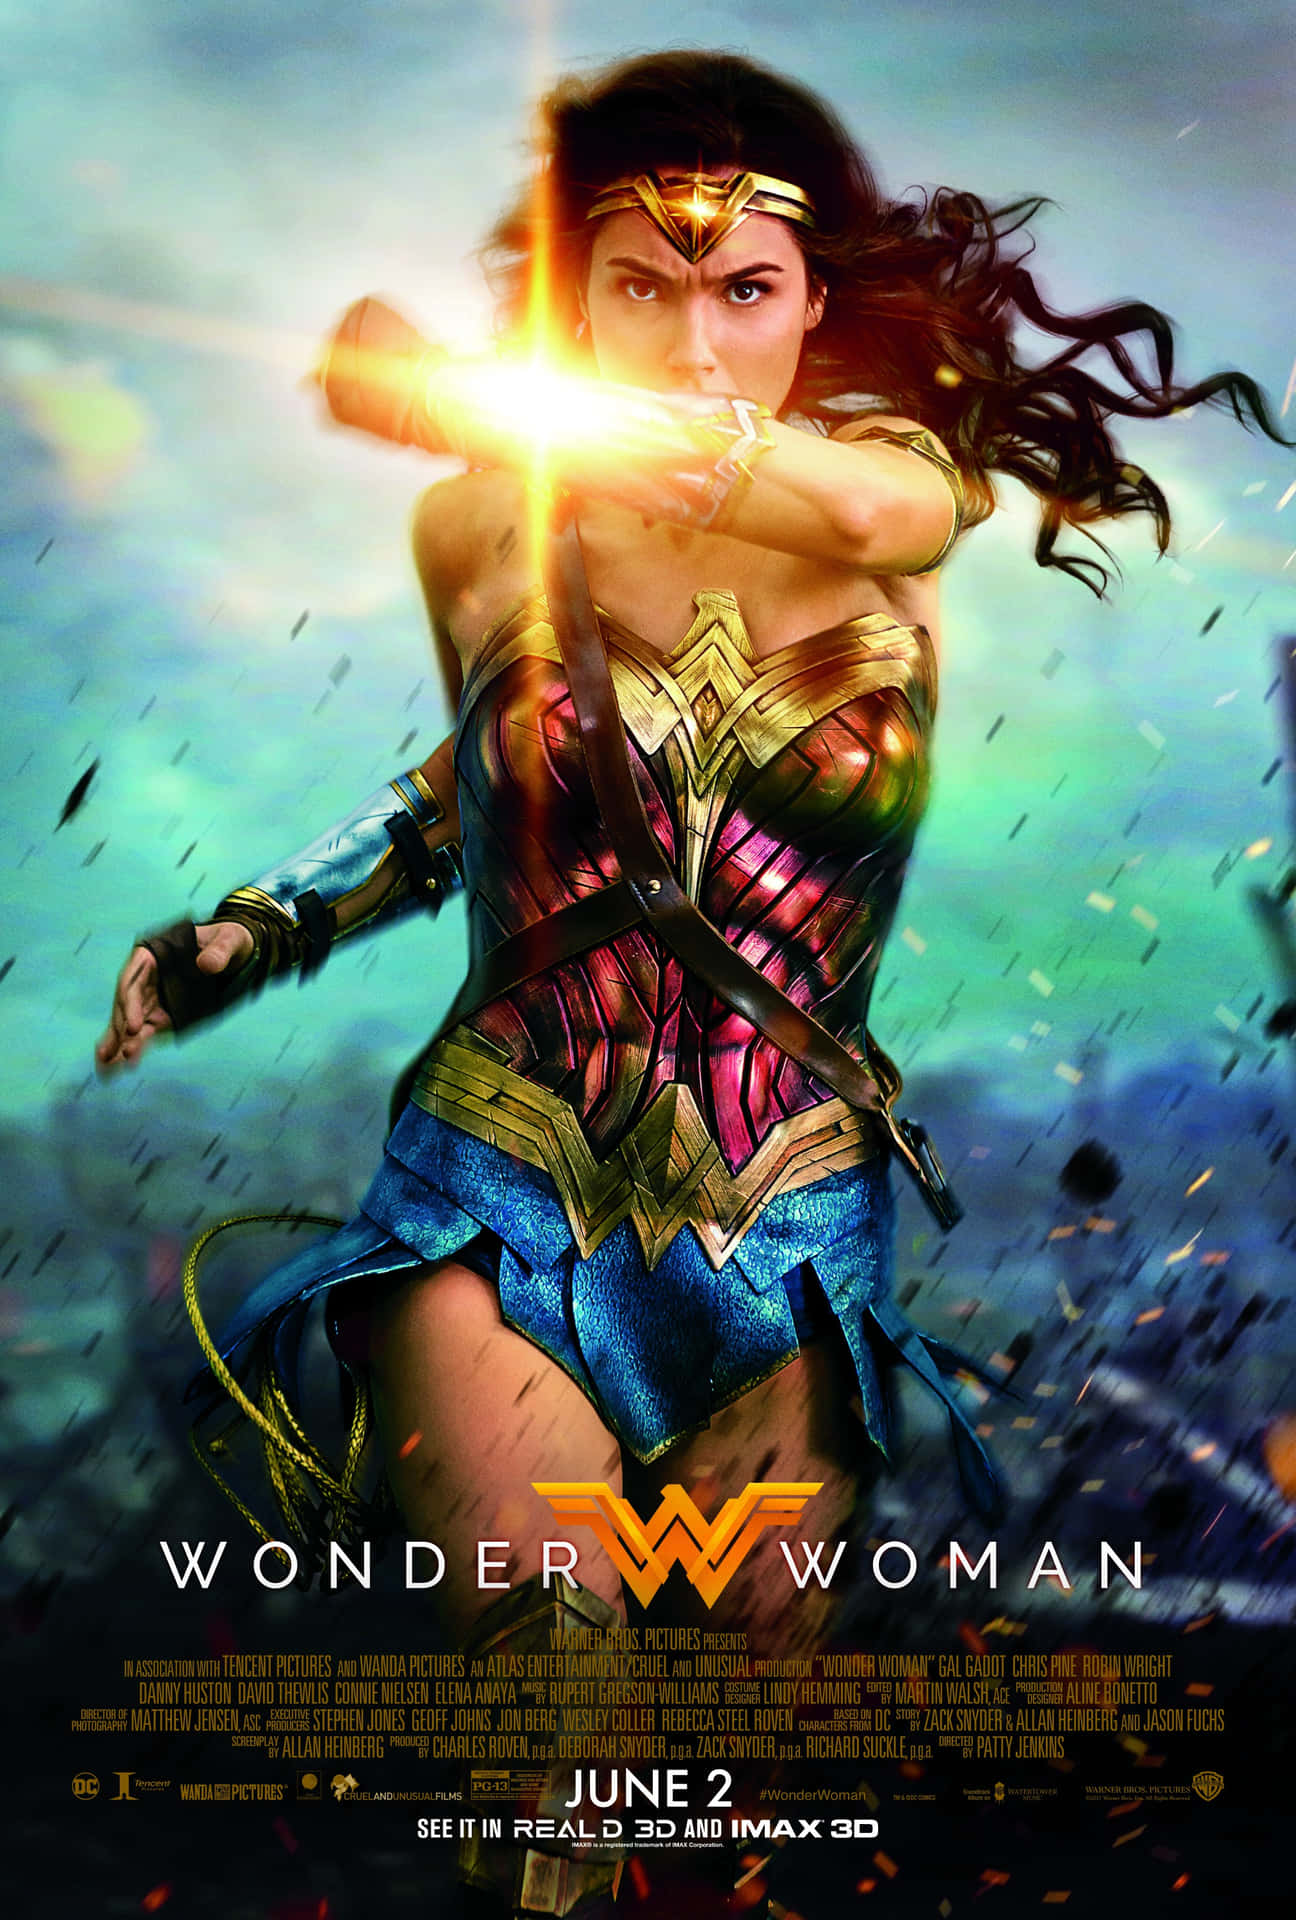 Wonder Woman is part of a superhero team